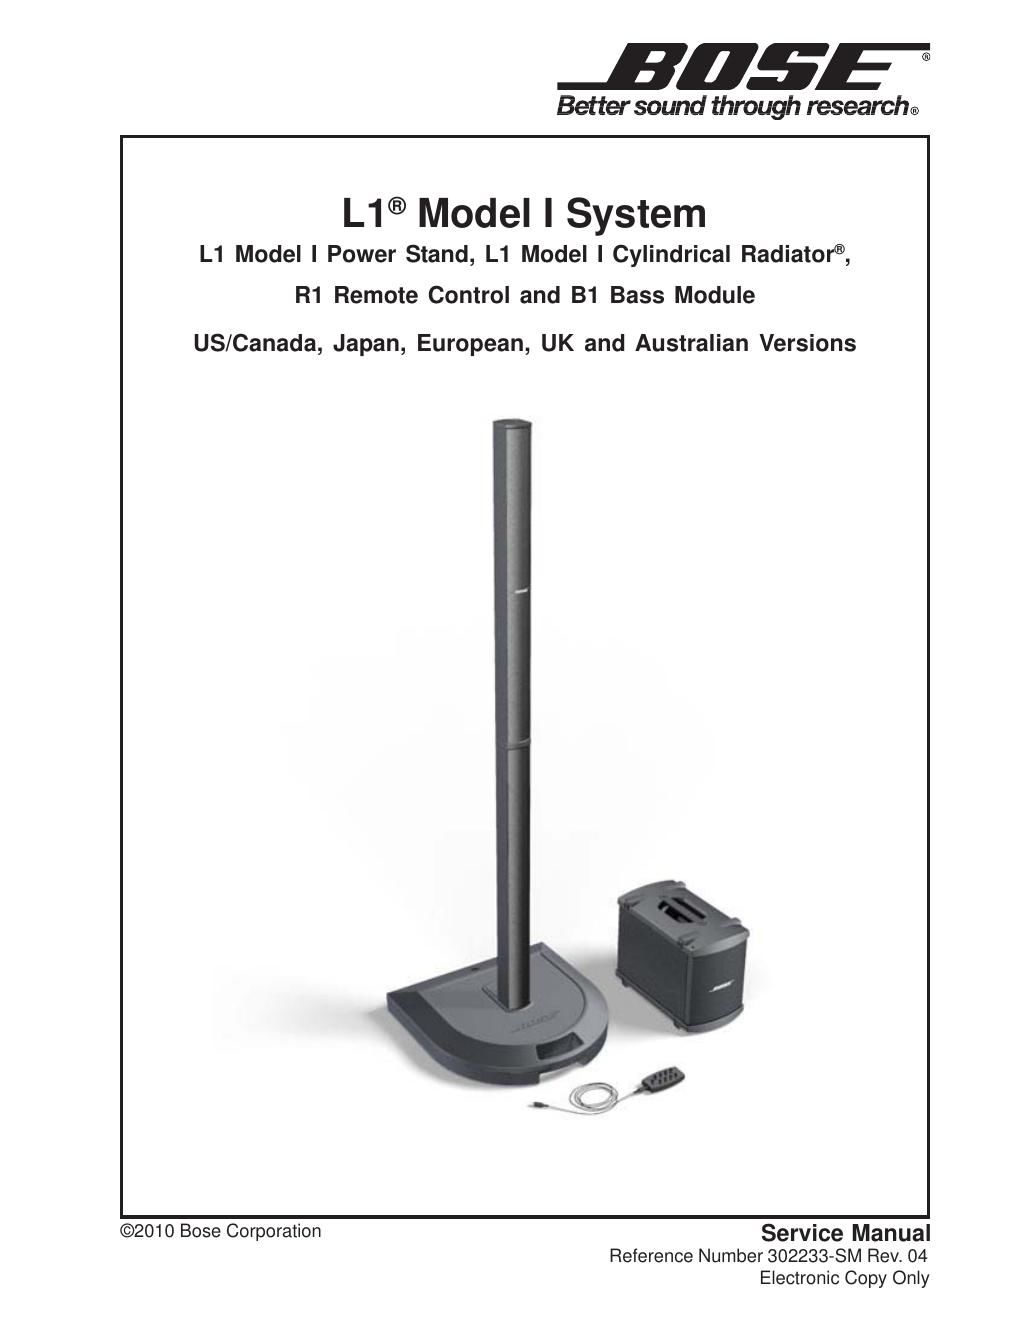 bose l1 bose model i system rev 04; us can euro uk and aus units